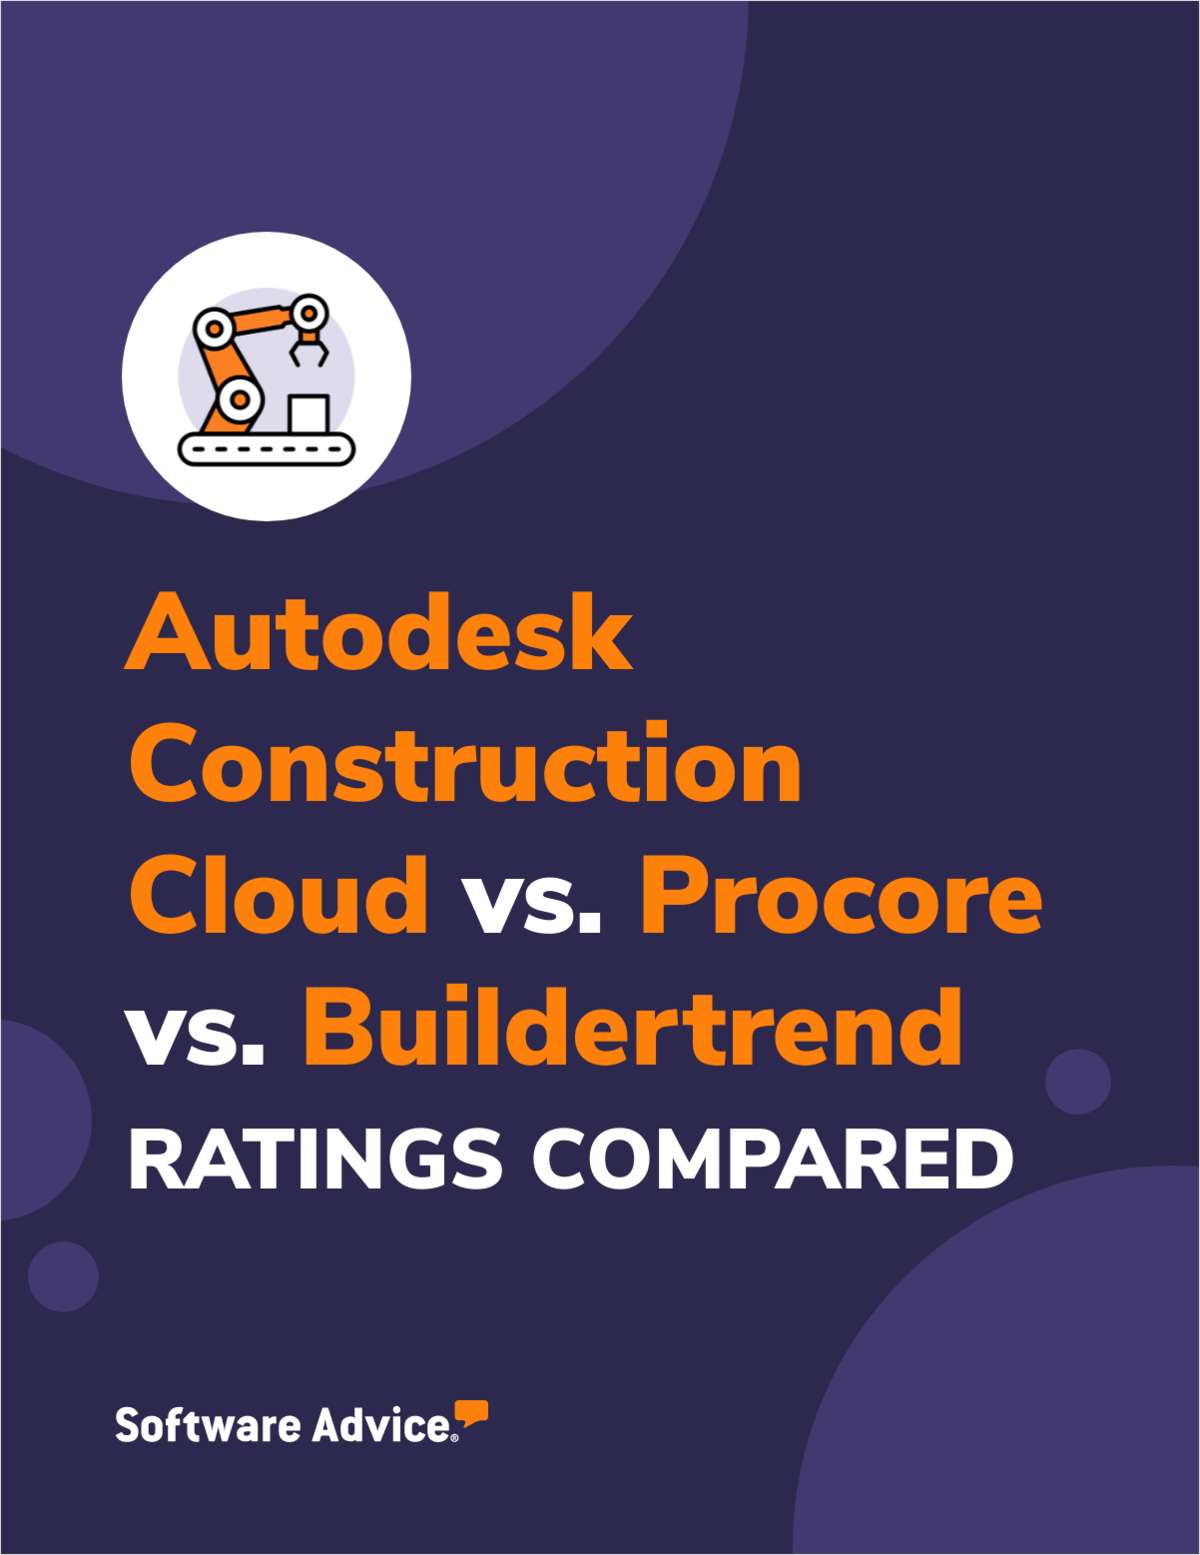 Autodesk Construction Cloud vs Procore vs Buildertrend Ratings Compared